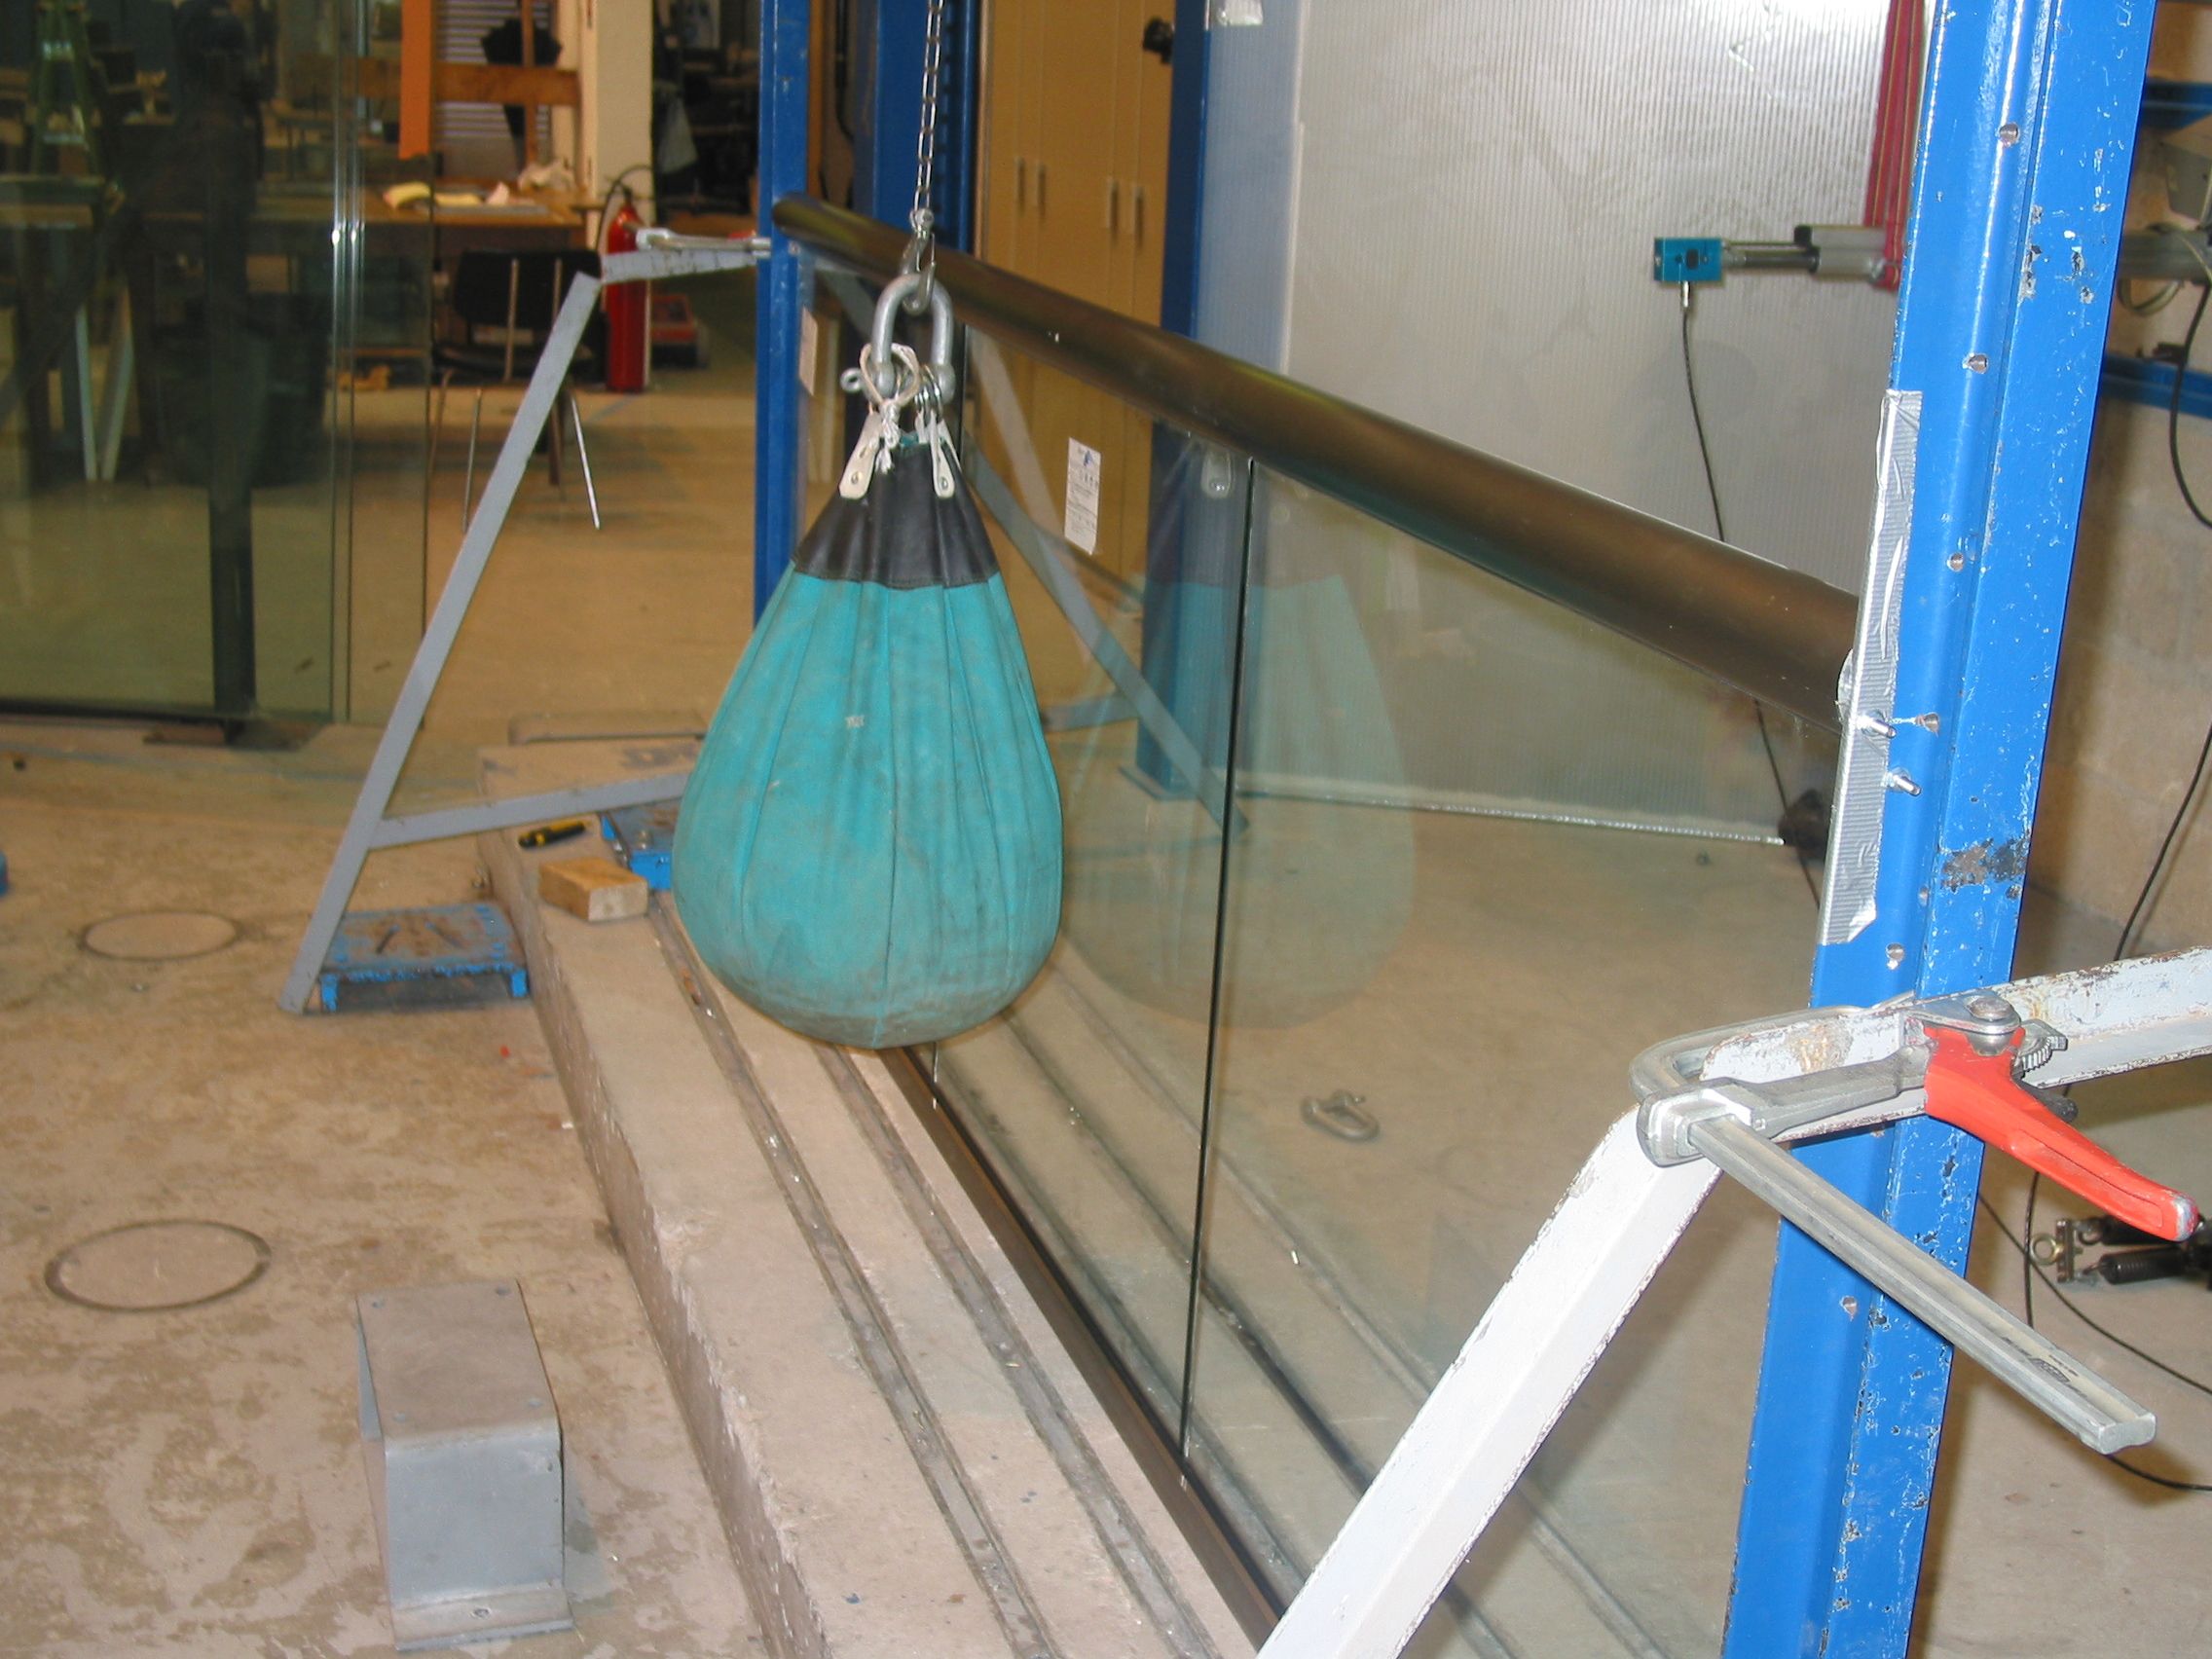 Inpact Testing on Glass and Balustrade